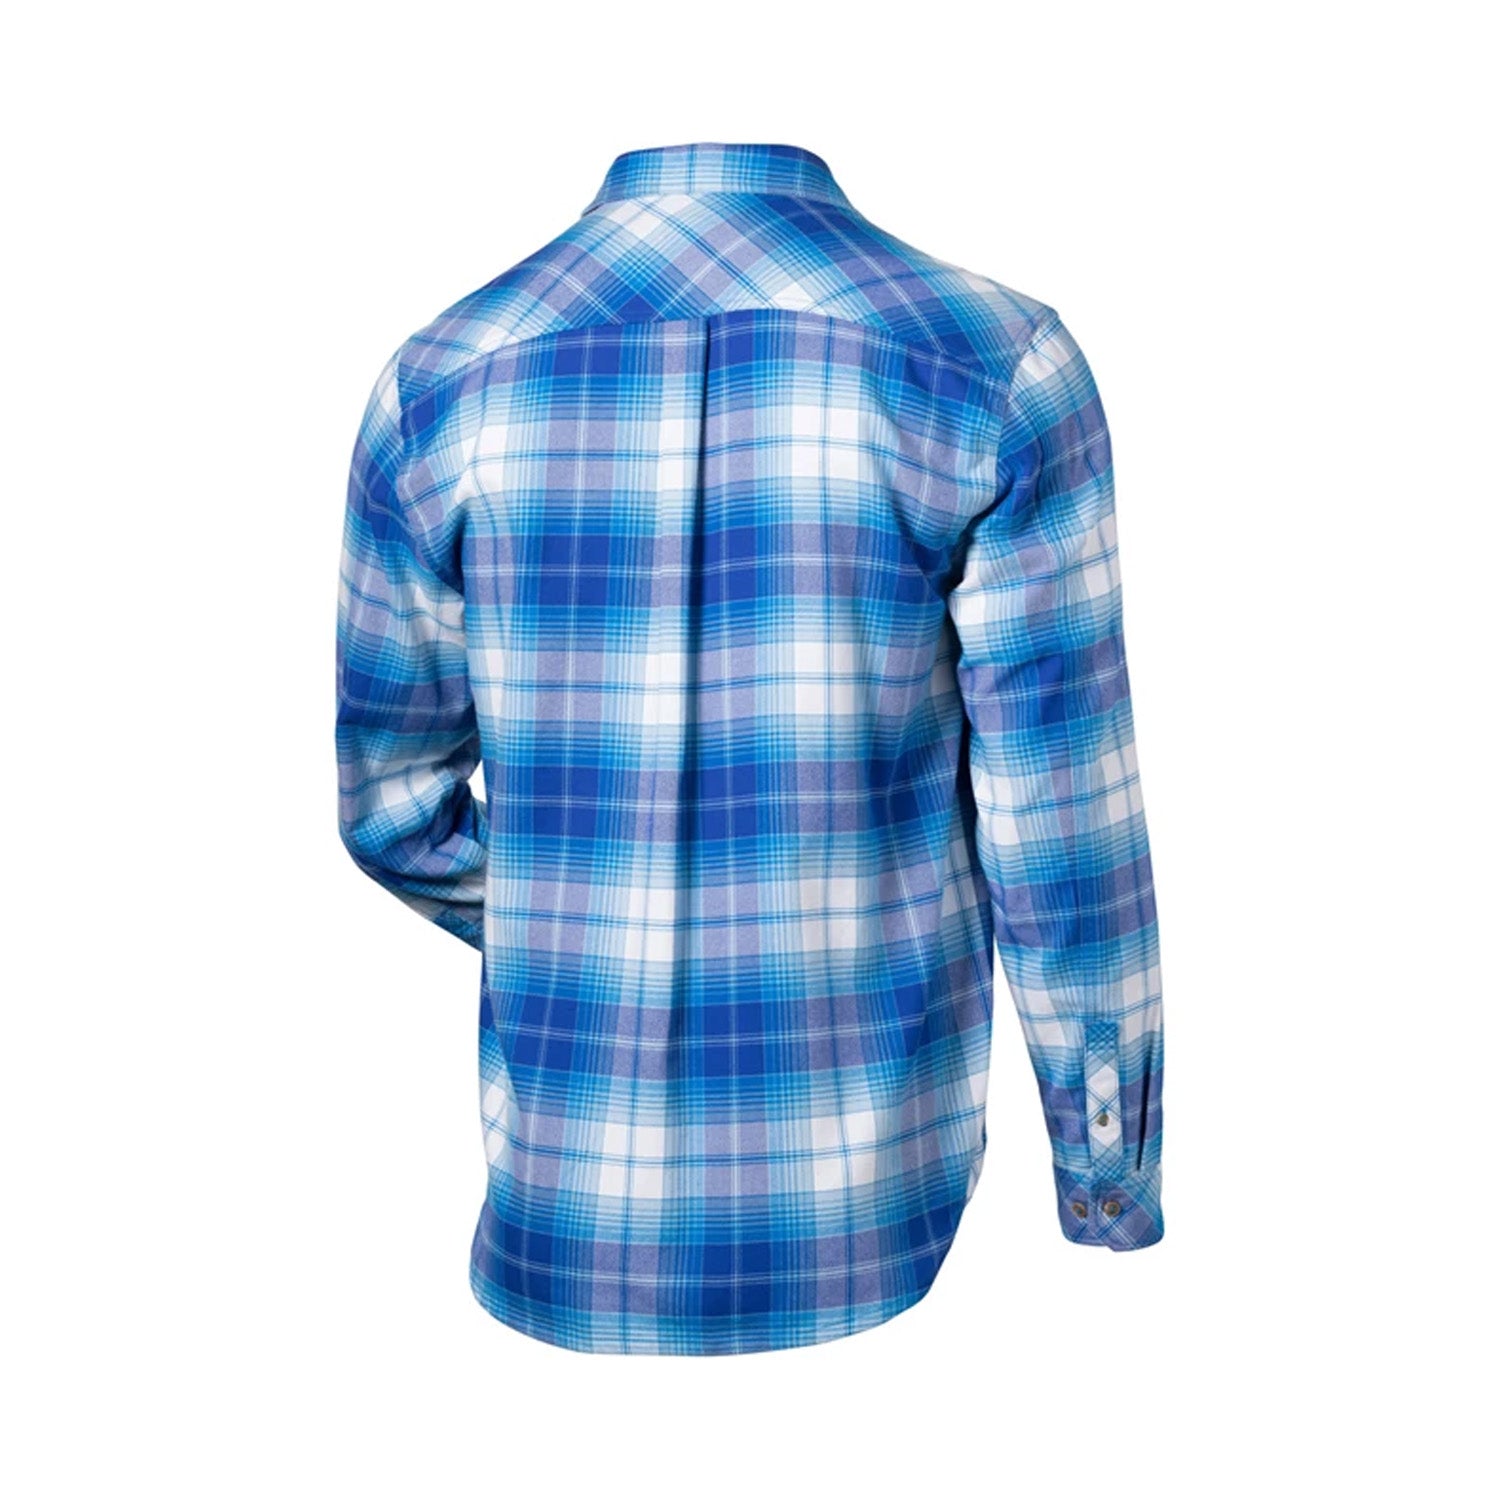 Genuine OEM Polaris Men's Plaid Flannel Shirt